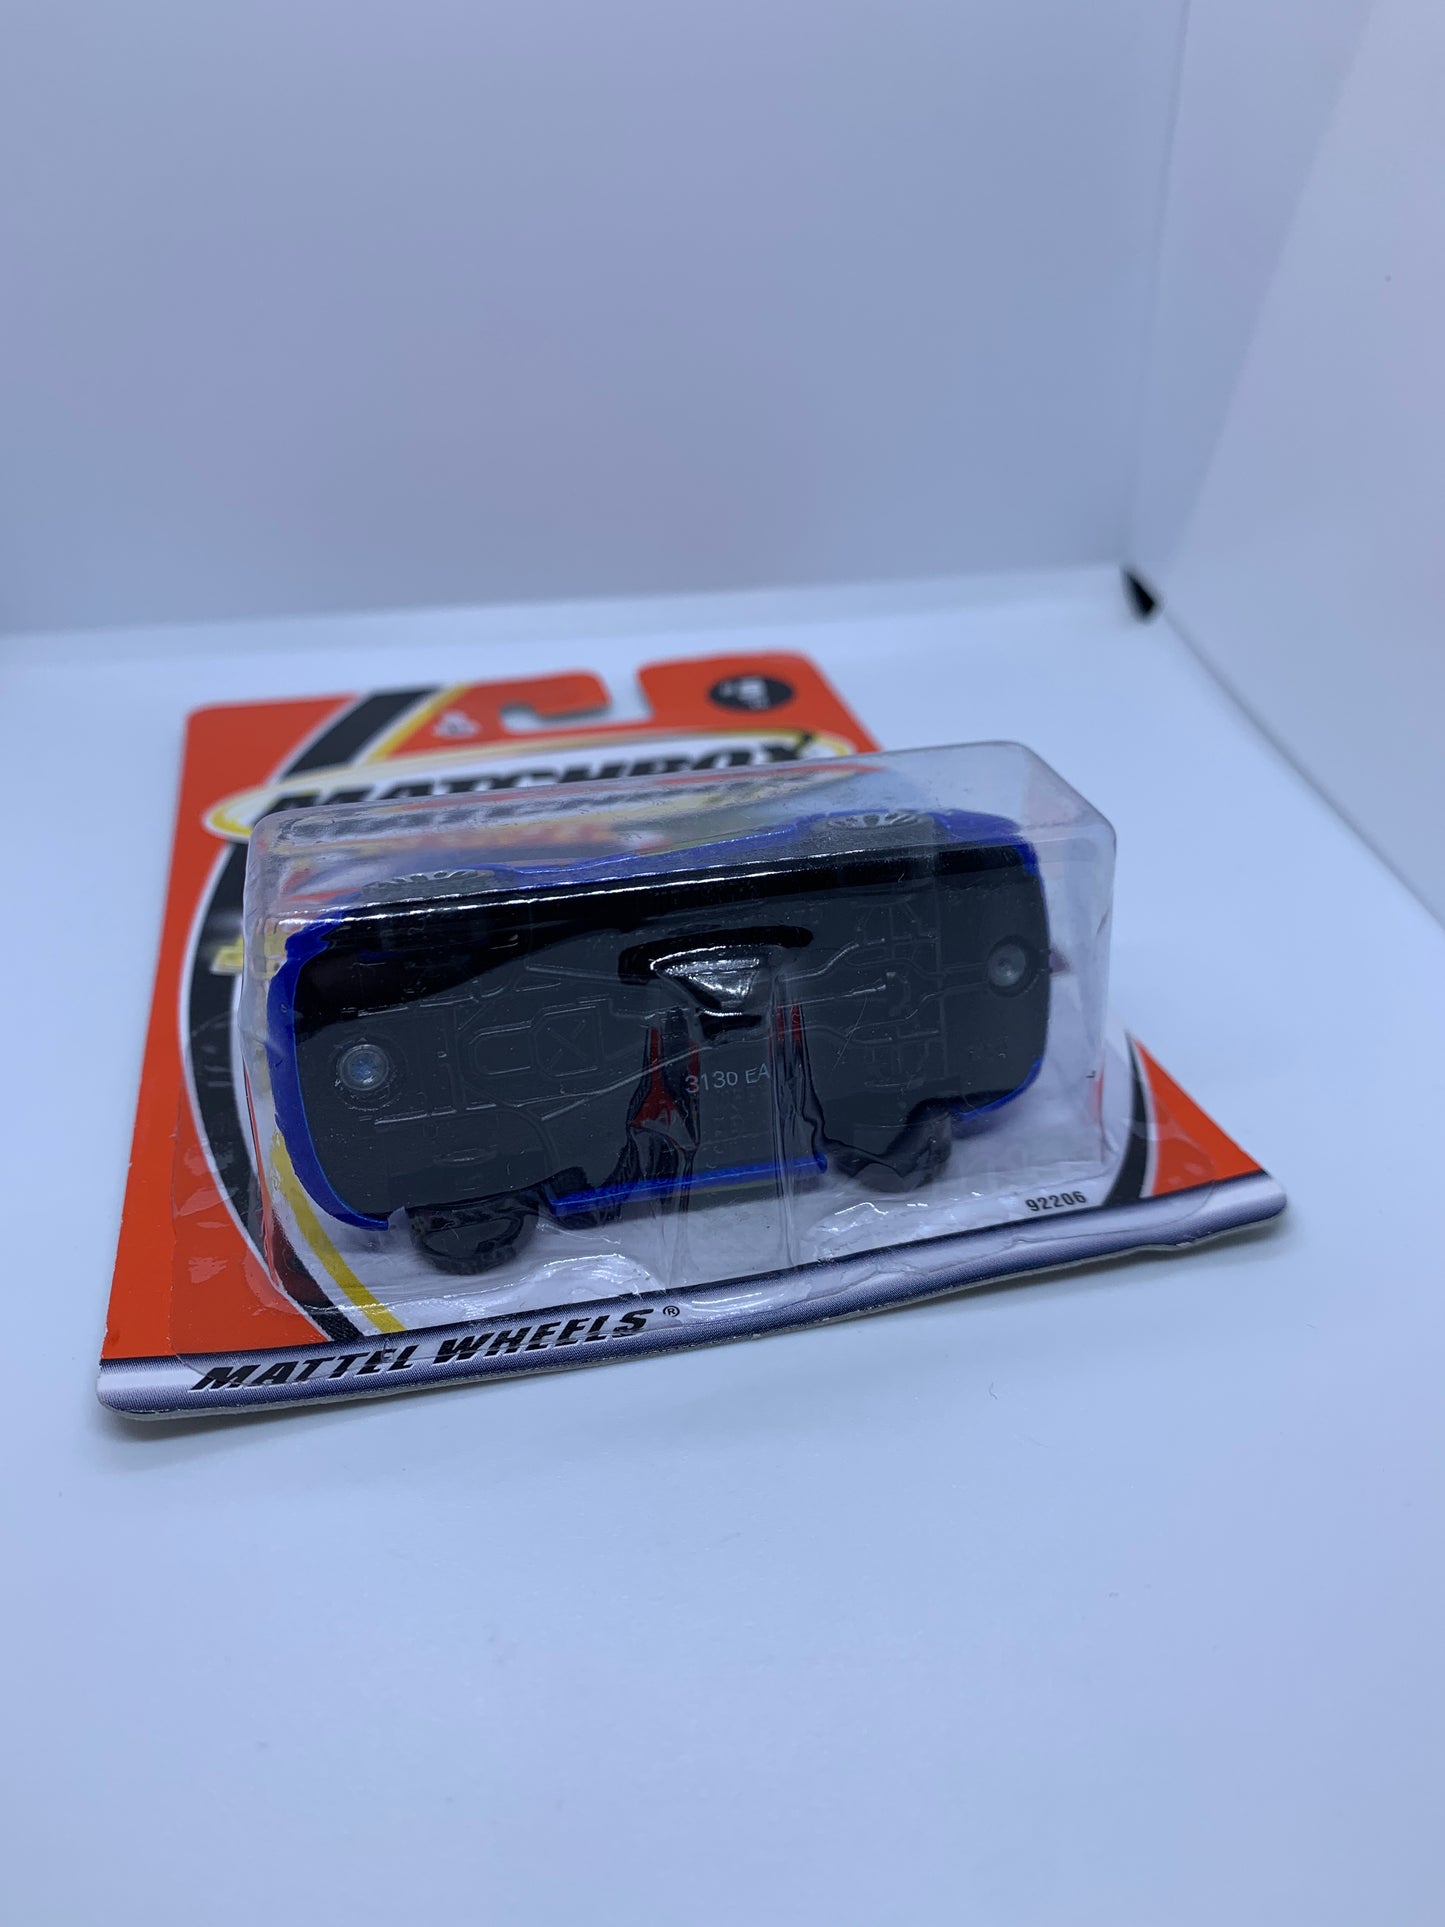 Matchbox - Dodge Viper GTS Blue - Damaged Card